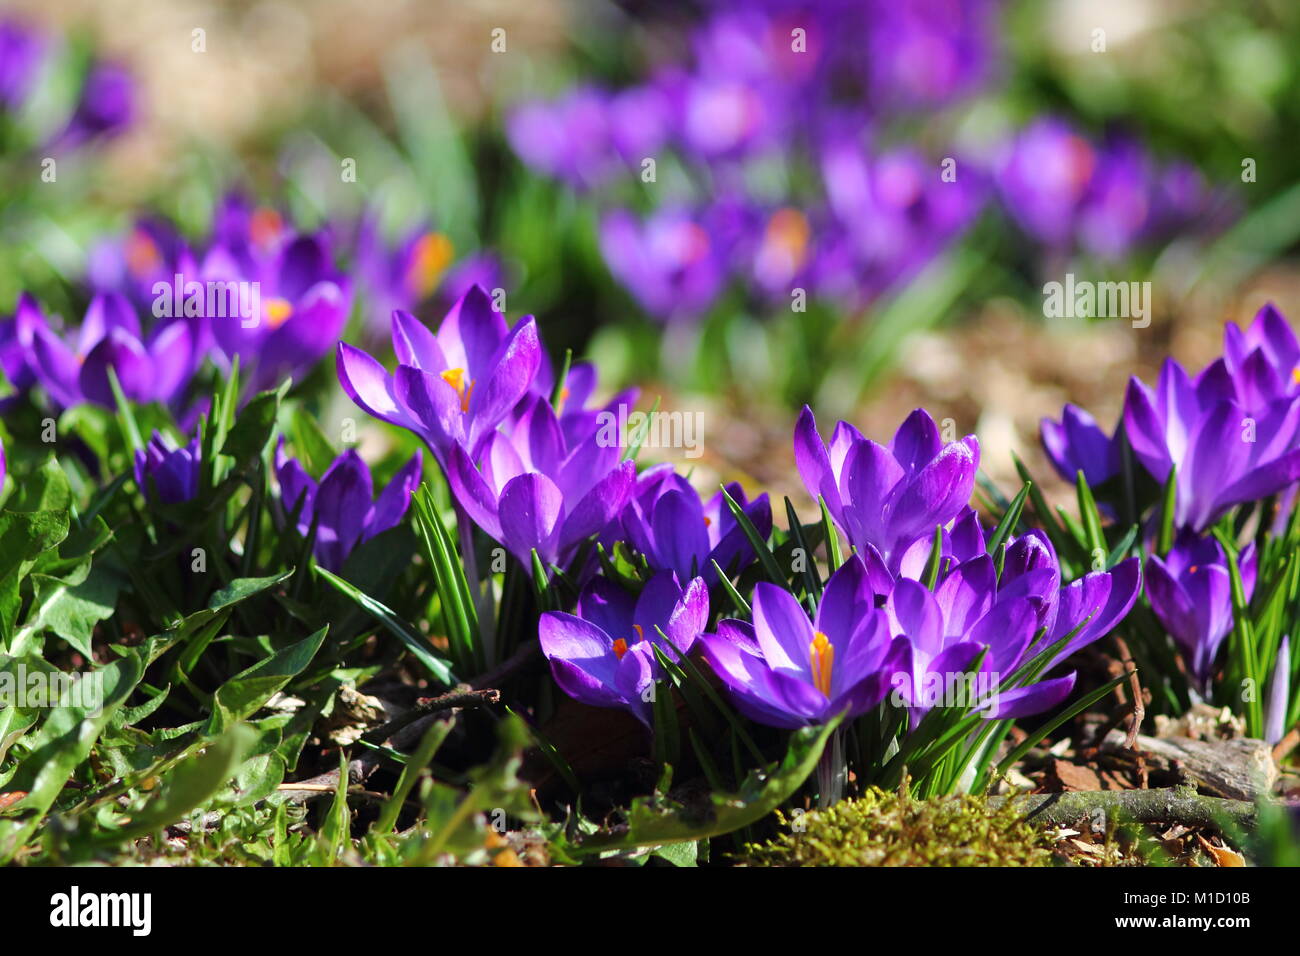 Purple crocuses in sunlight. Stock Photo